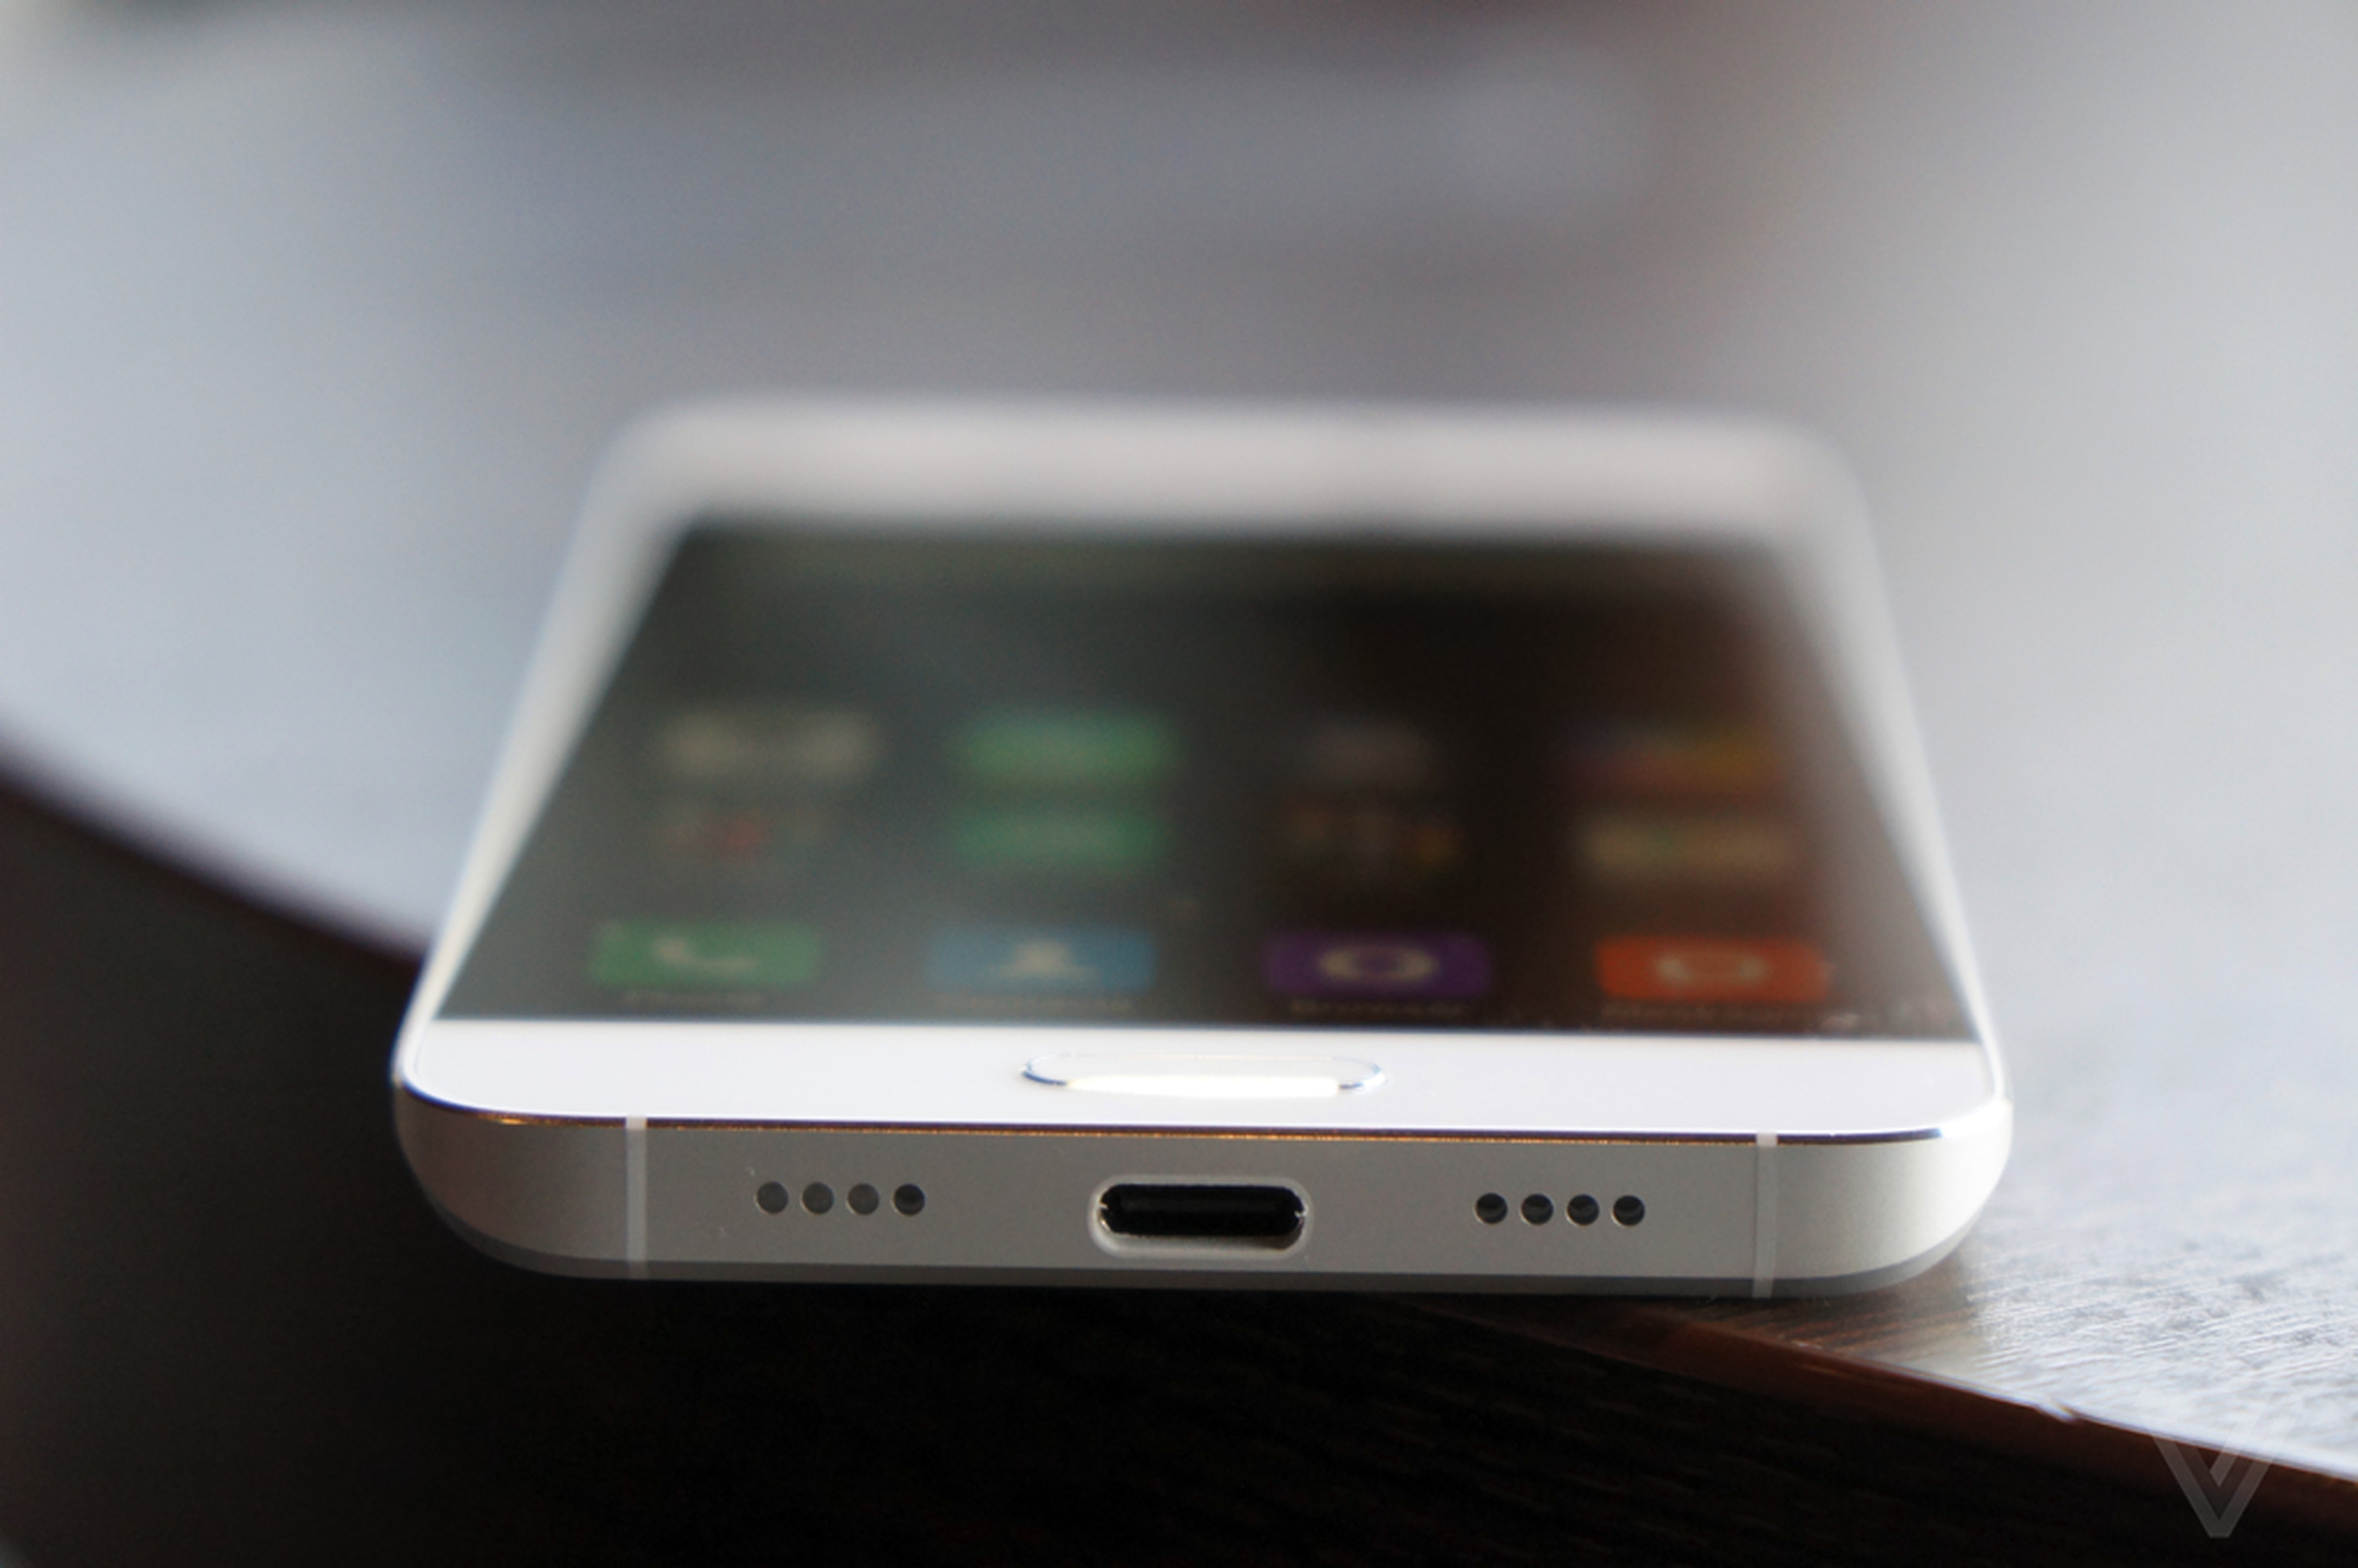 Xiaomi Mi5 hands-on photos